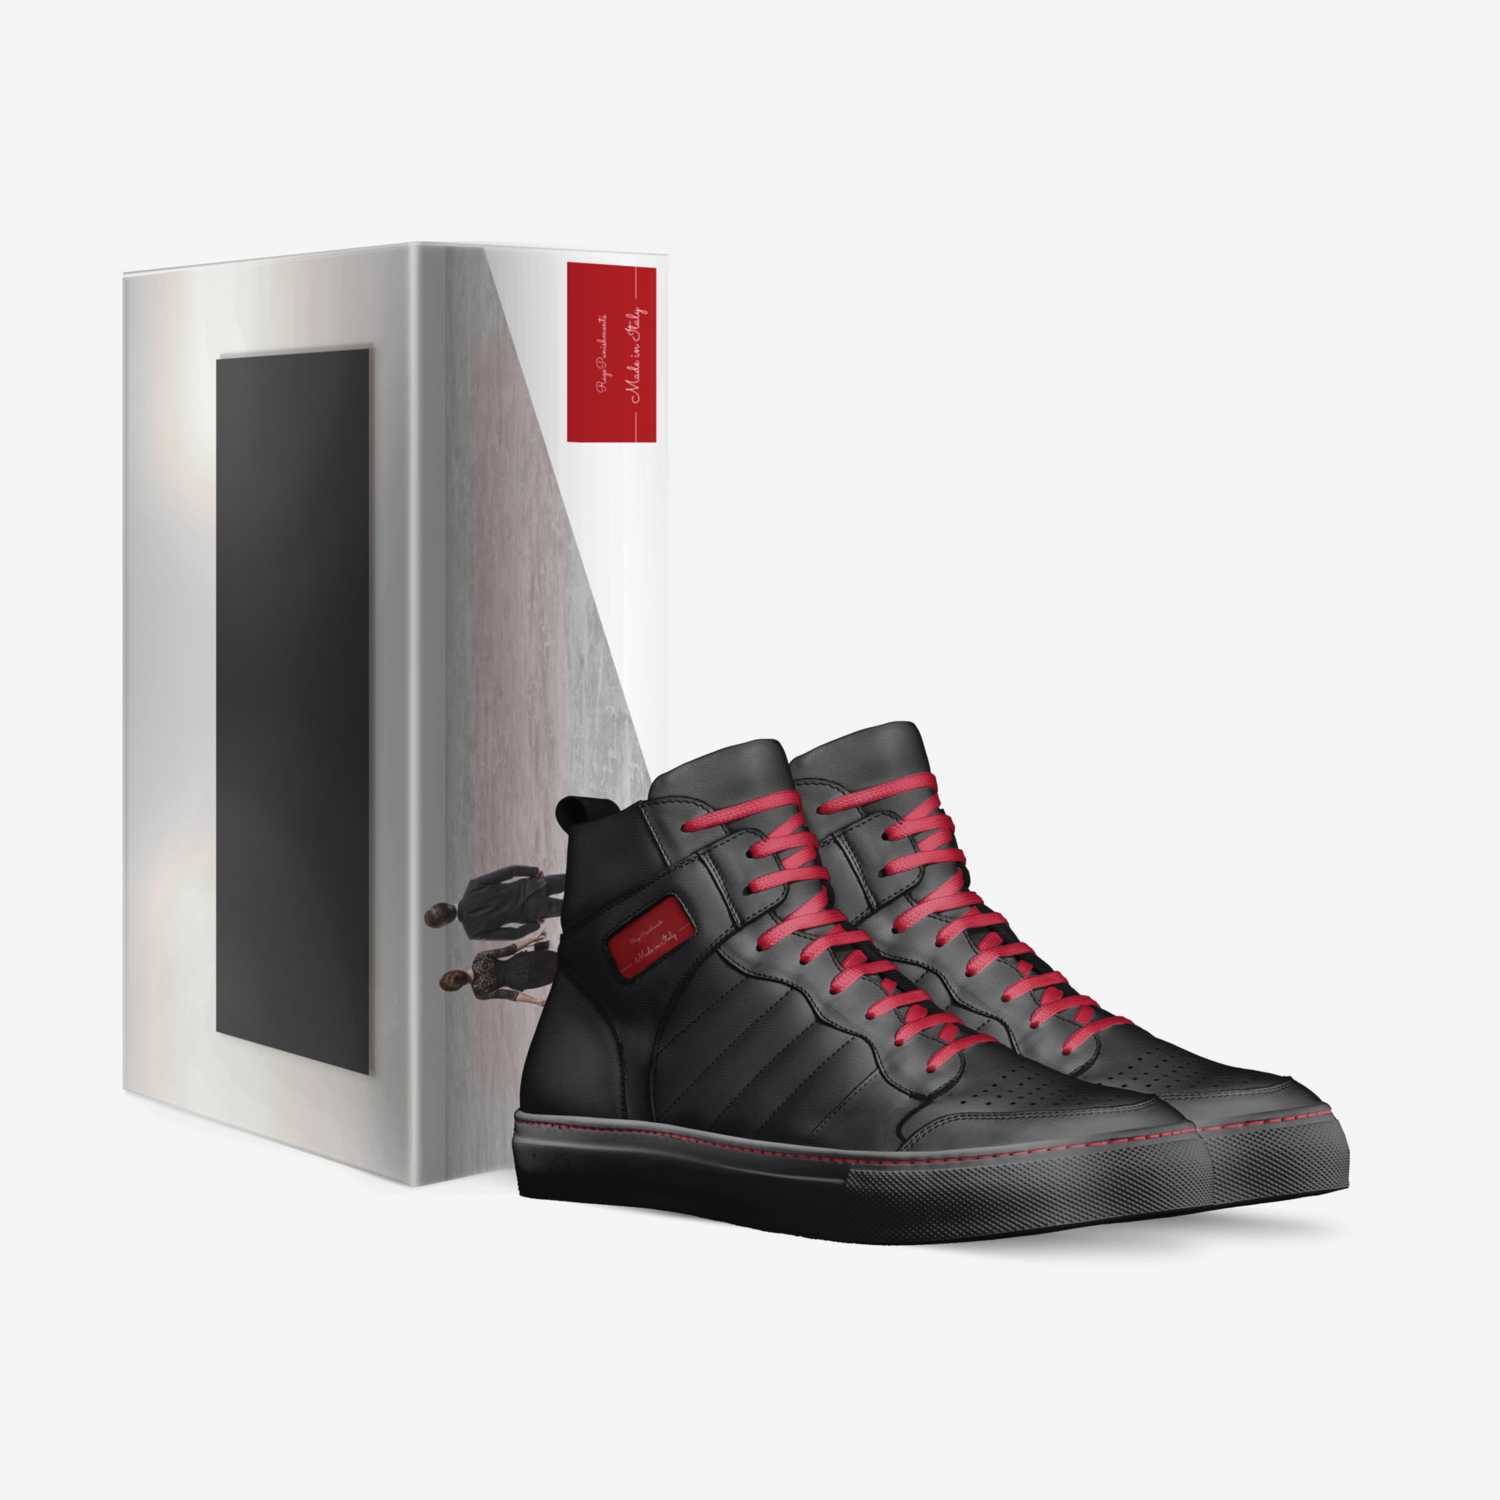 RagePunishments custom made in Italy shoes by Dakota Smith | Box view